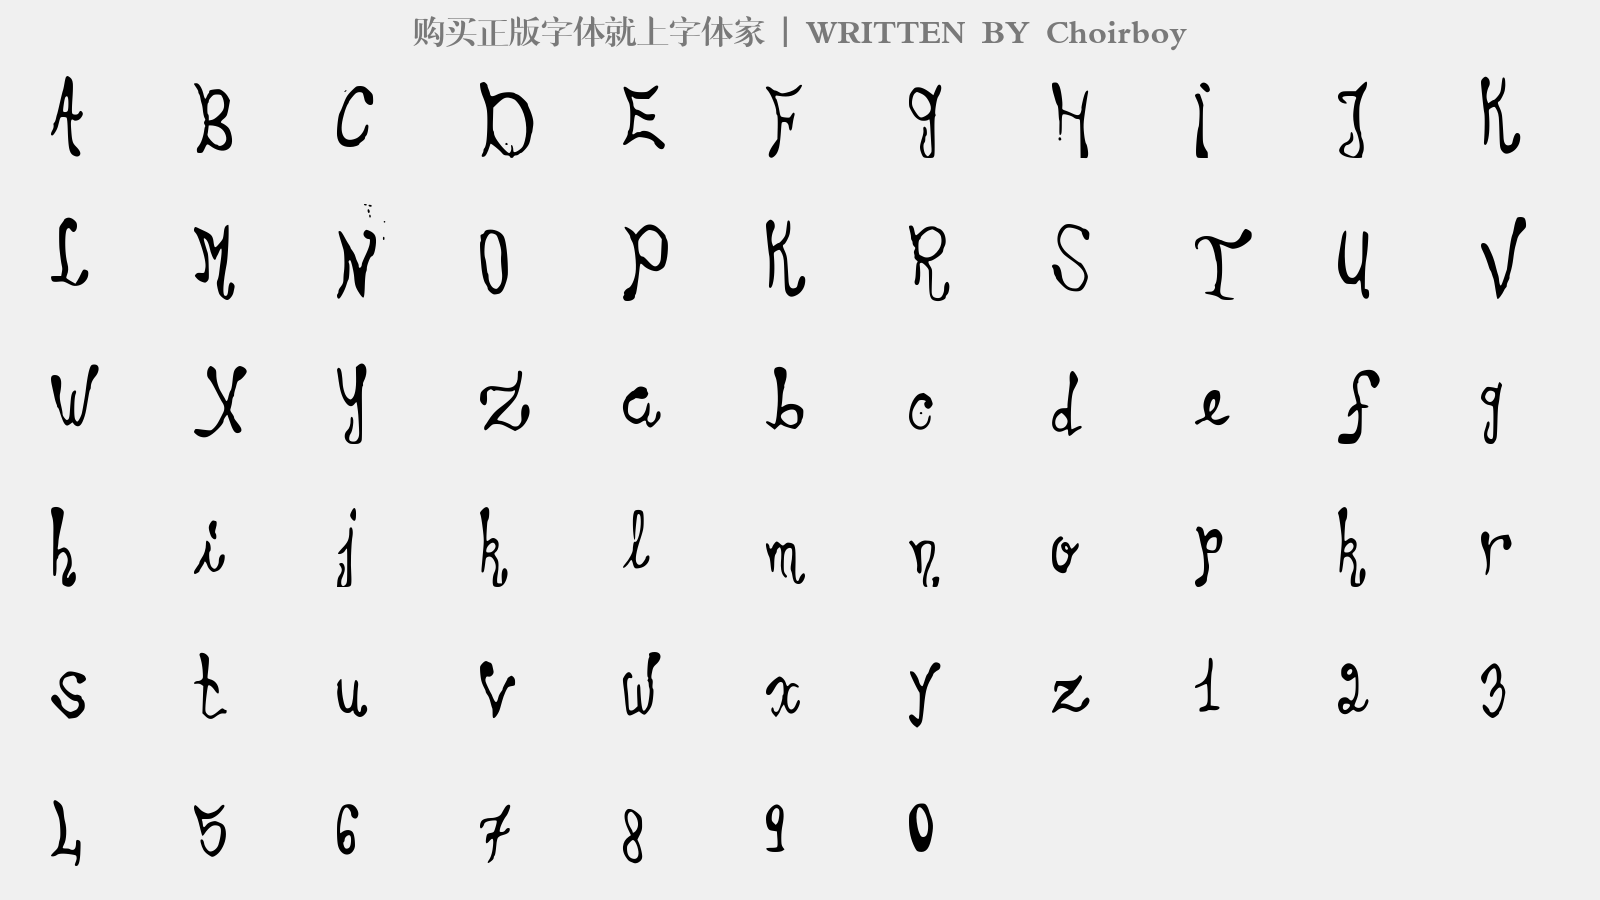 Choirboy - 大写字母/小写字母/数字